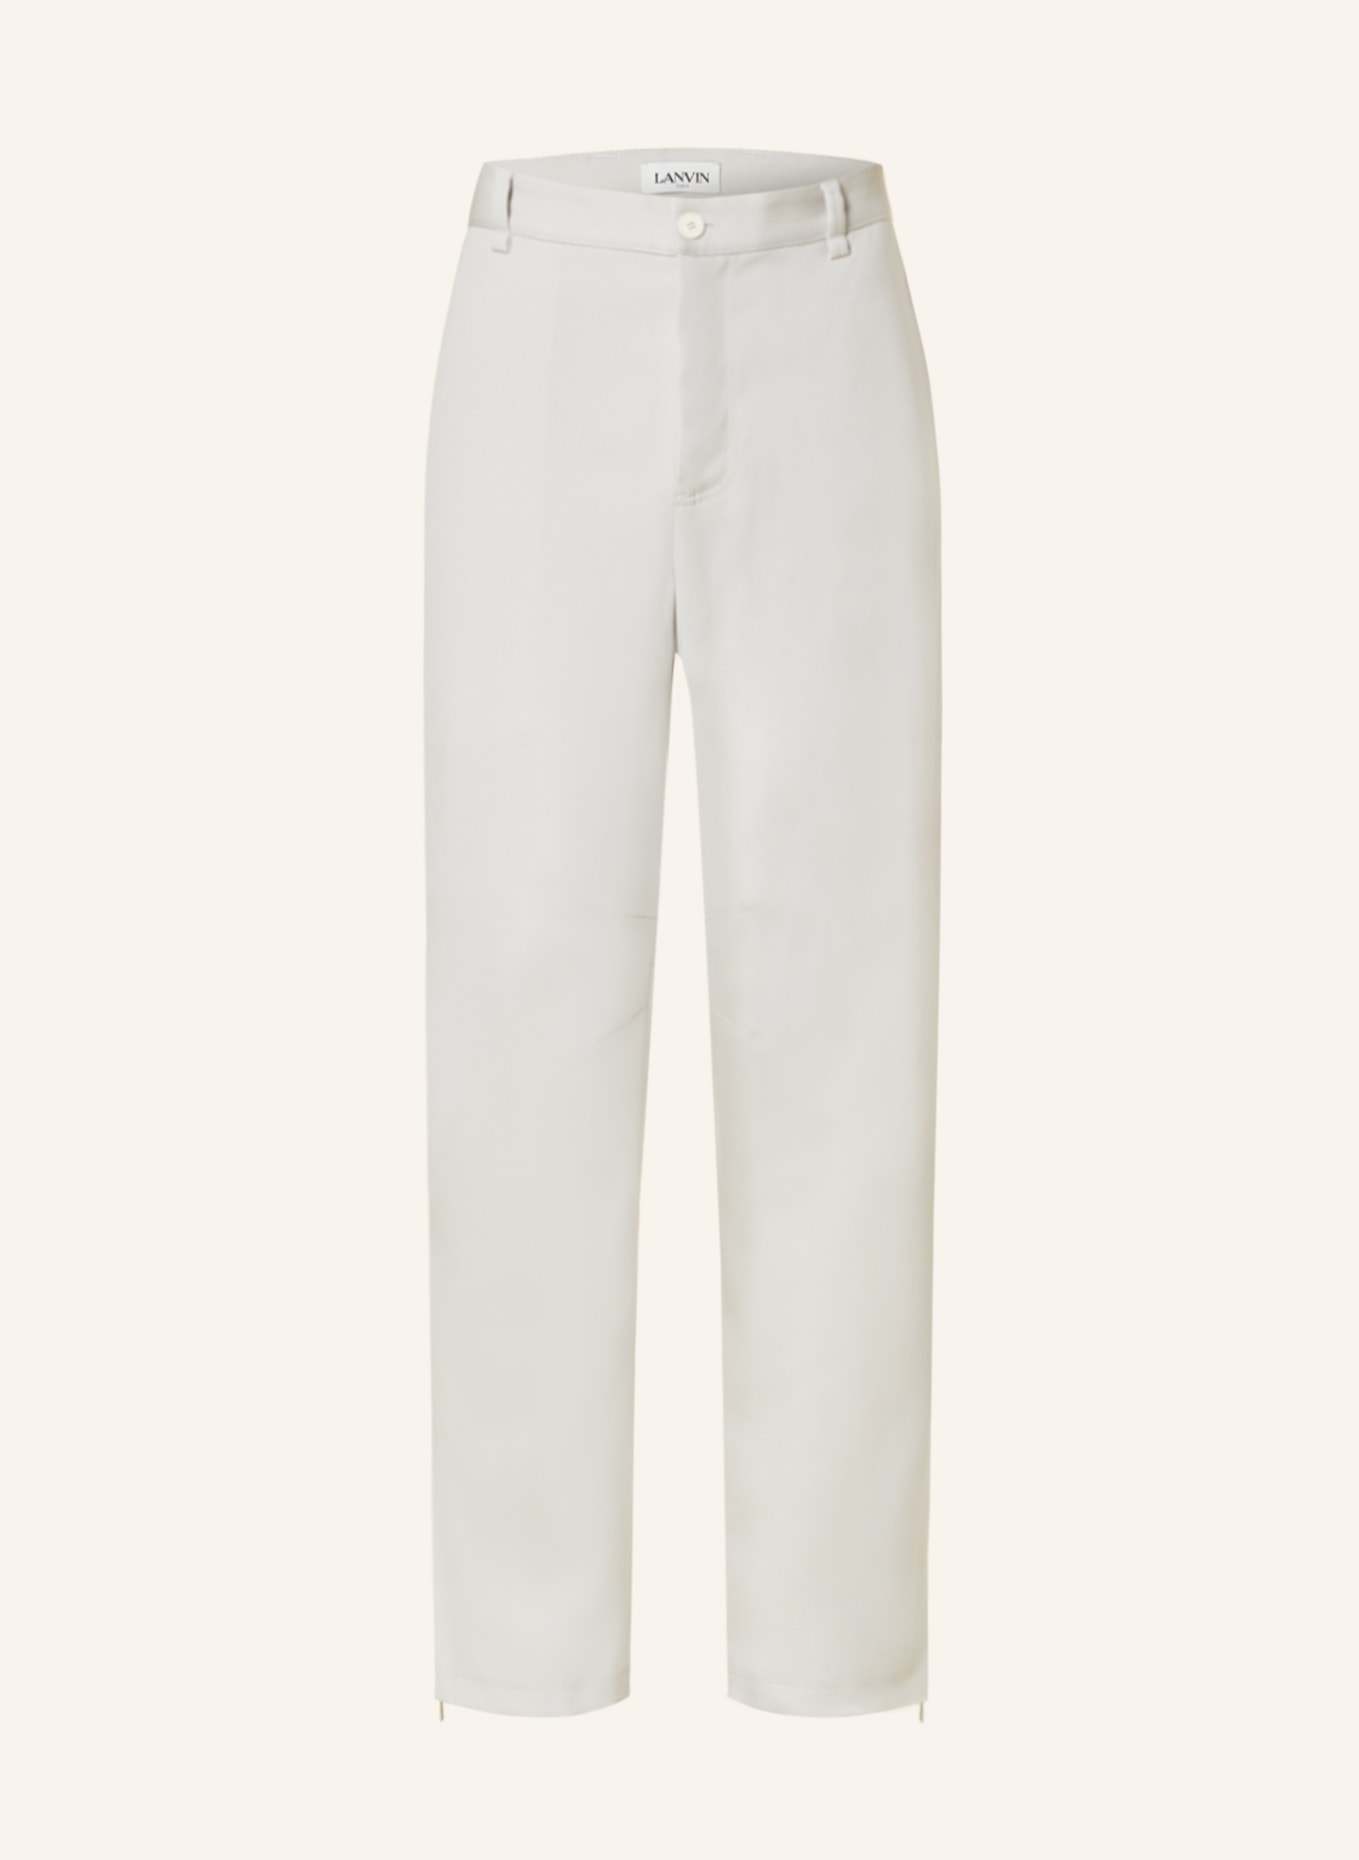 LANVIN Trousers regular fit, Color: LIGHT GRAY (Image 1)